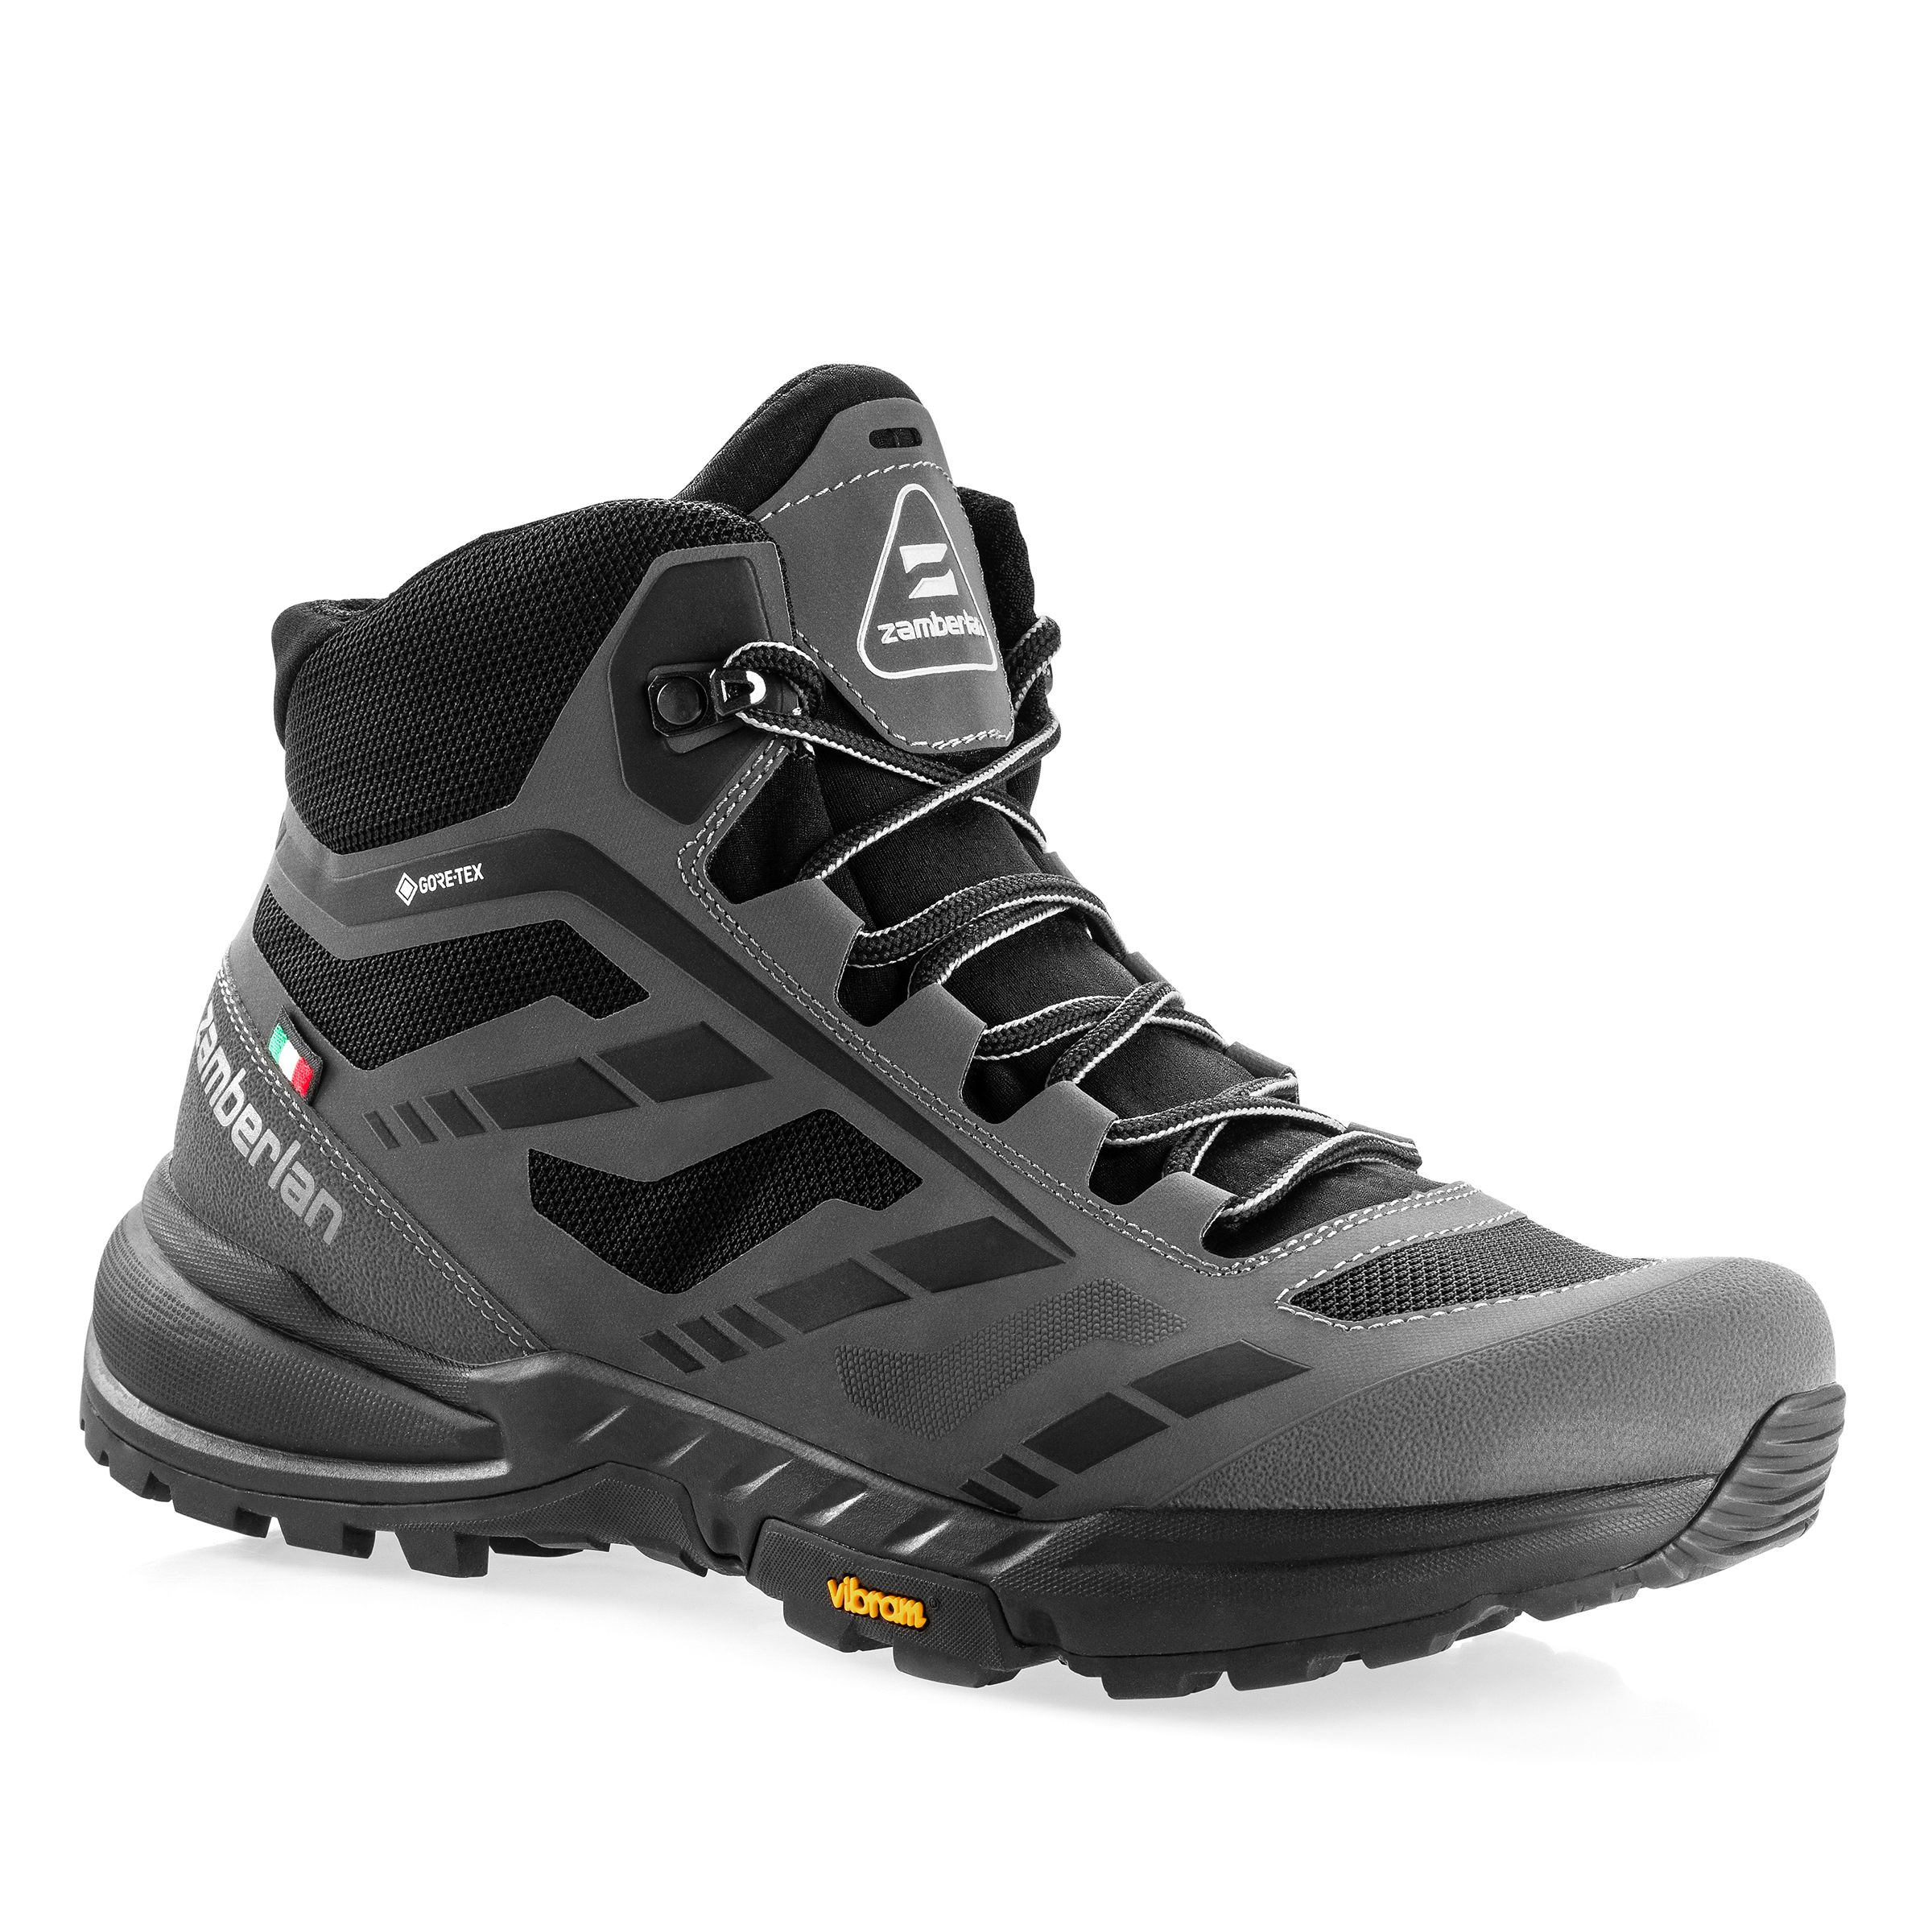 Zamberlan 219 Anabasis GTX Waterproof Mid Hiking Boots for Men - Grey - 10.5M